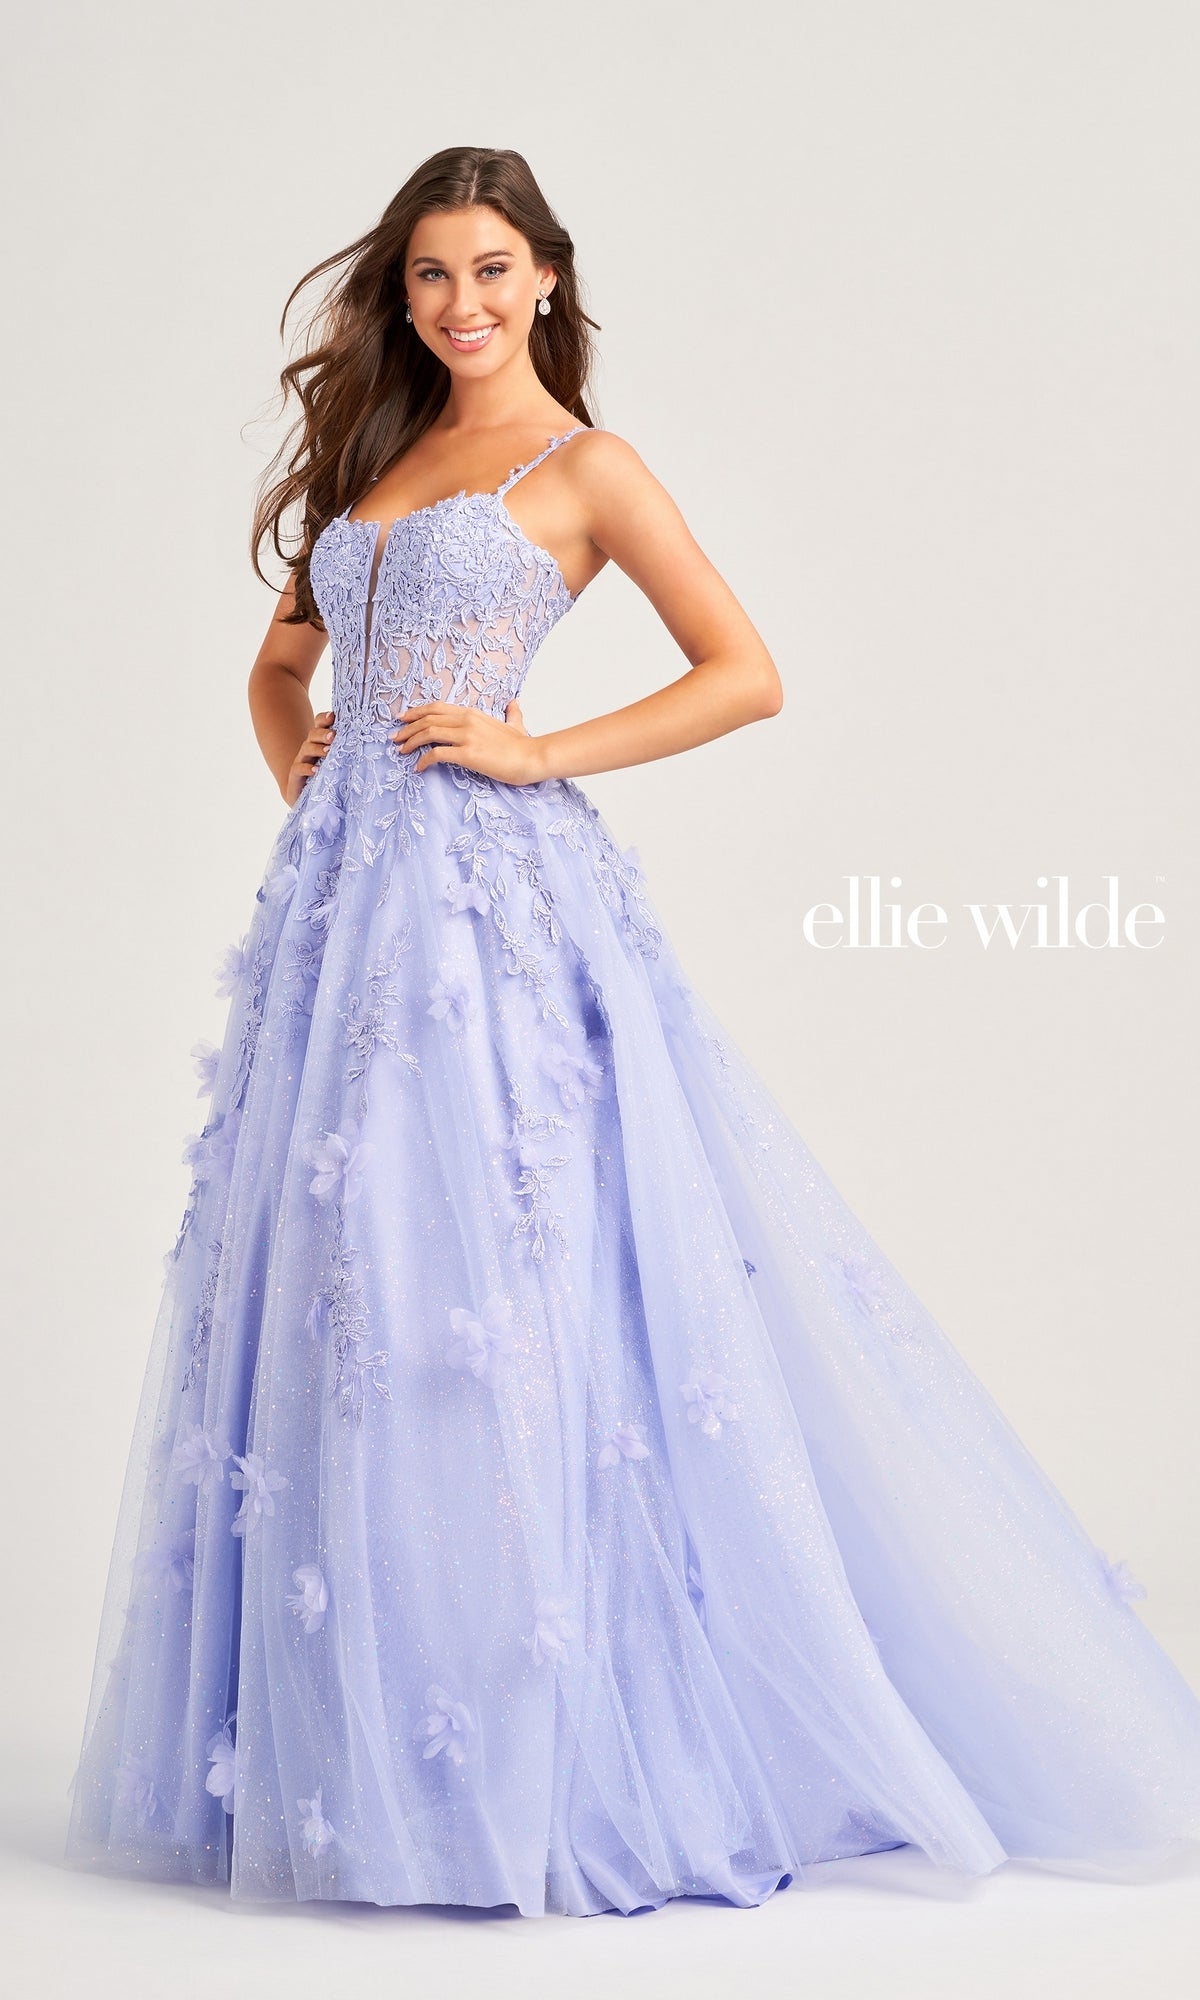 Glitter-Tulle Ellie Wilde Long Prom Gown EW35081